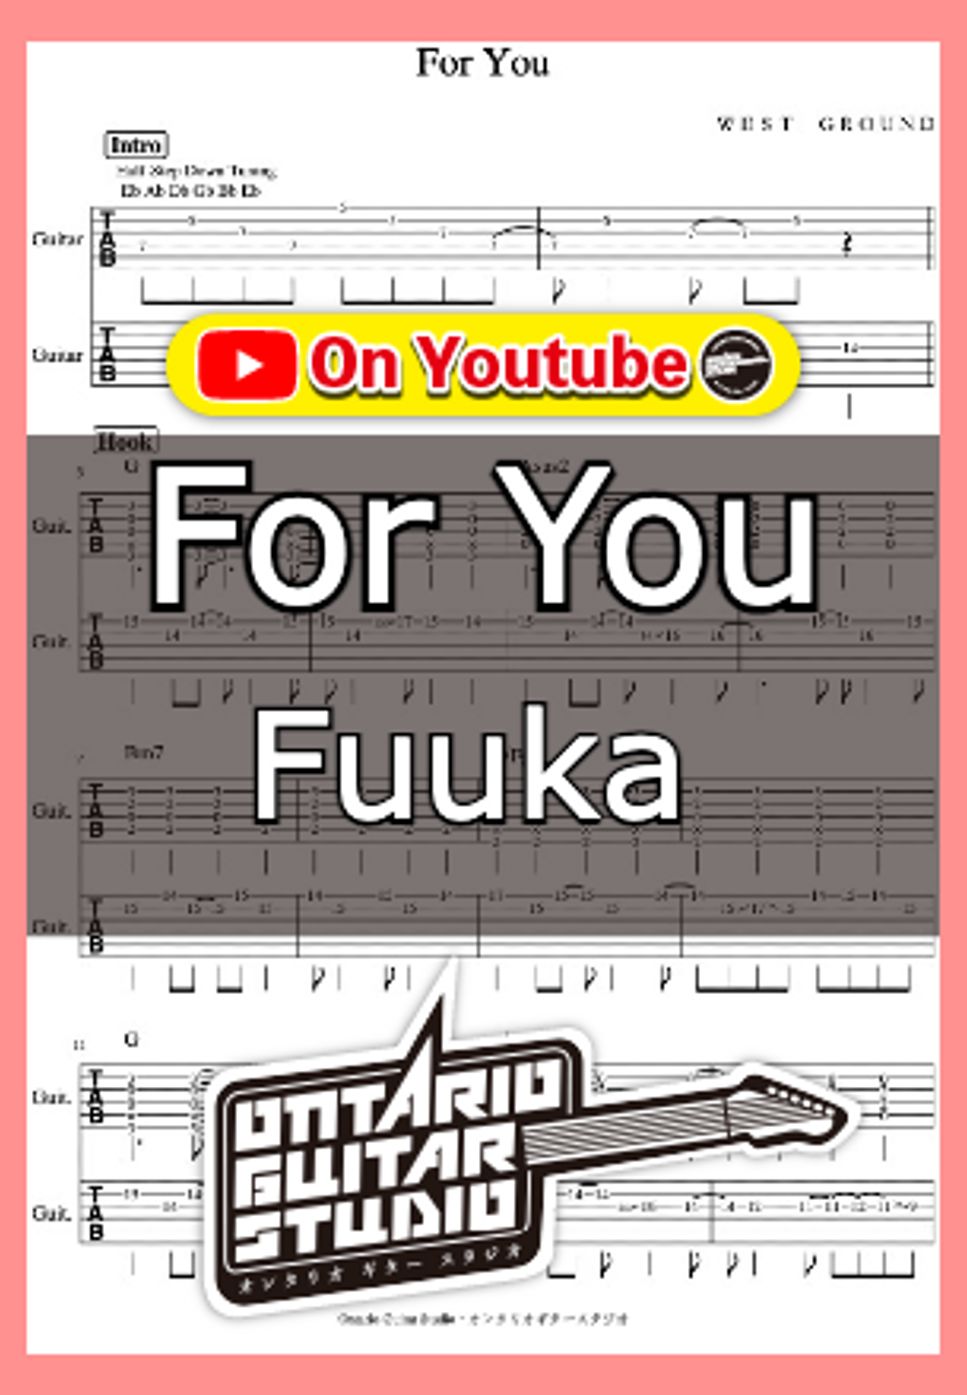 Fuuka - For You by Ontario Guitar Studio